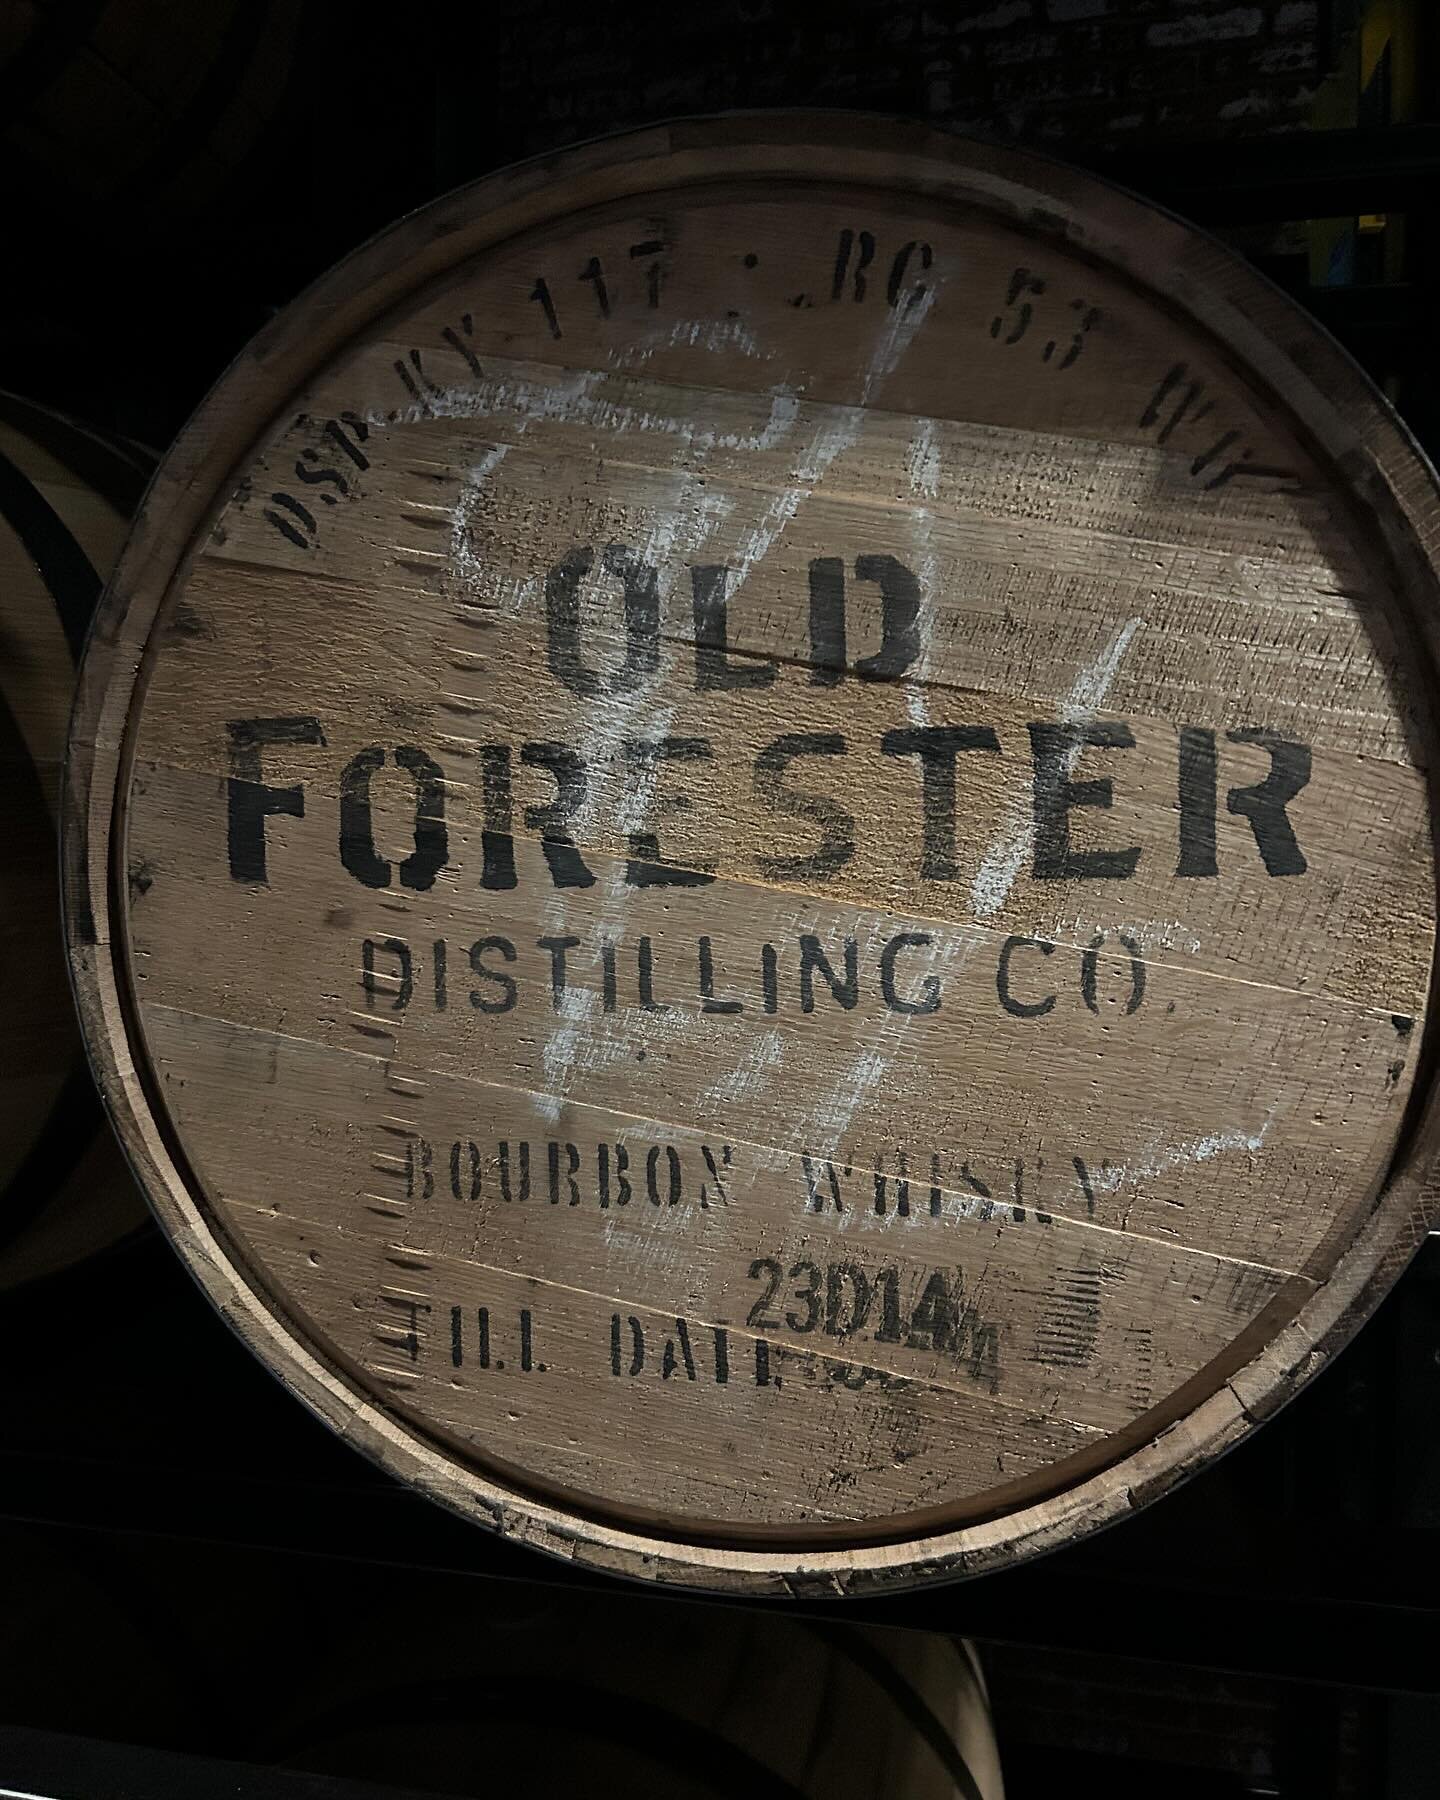 On to Old Forester!
#kentuckybourbontrail #bourbon #bourbon-whiskey #liquidgold #bourbongram #whiskey #whisky #whiskeyandwatches
#oldforester